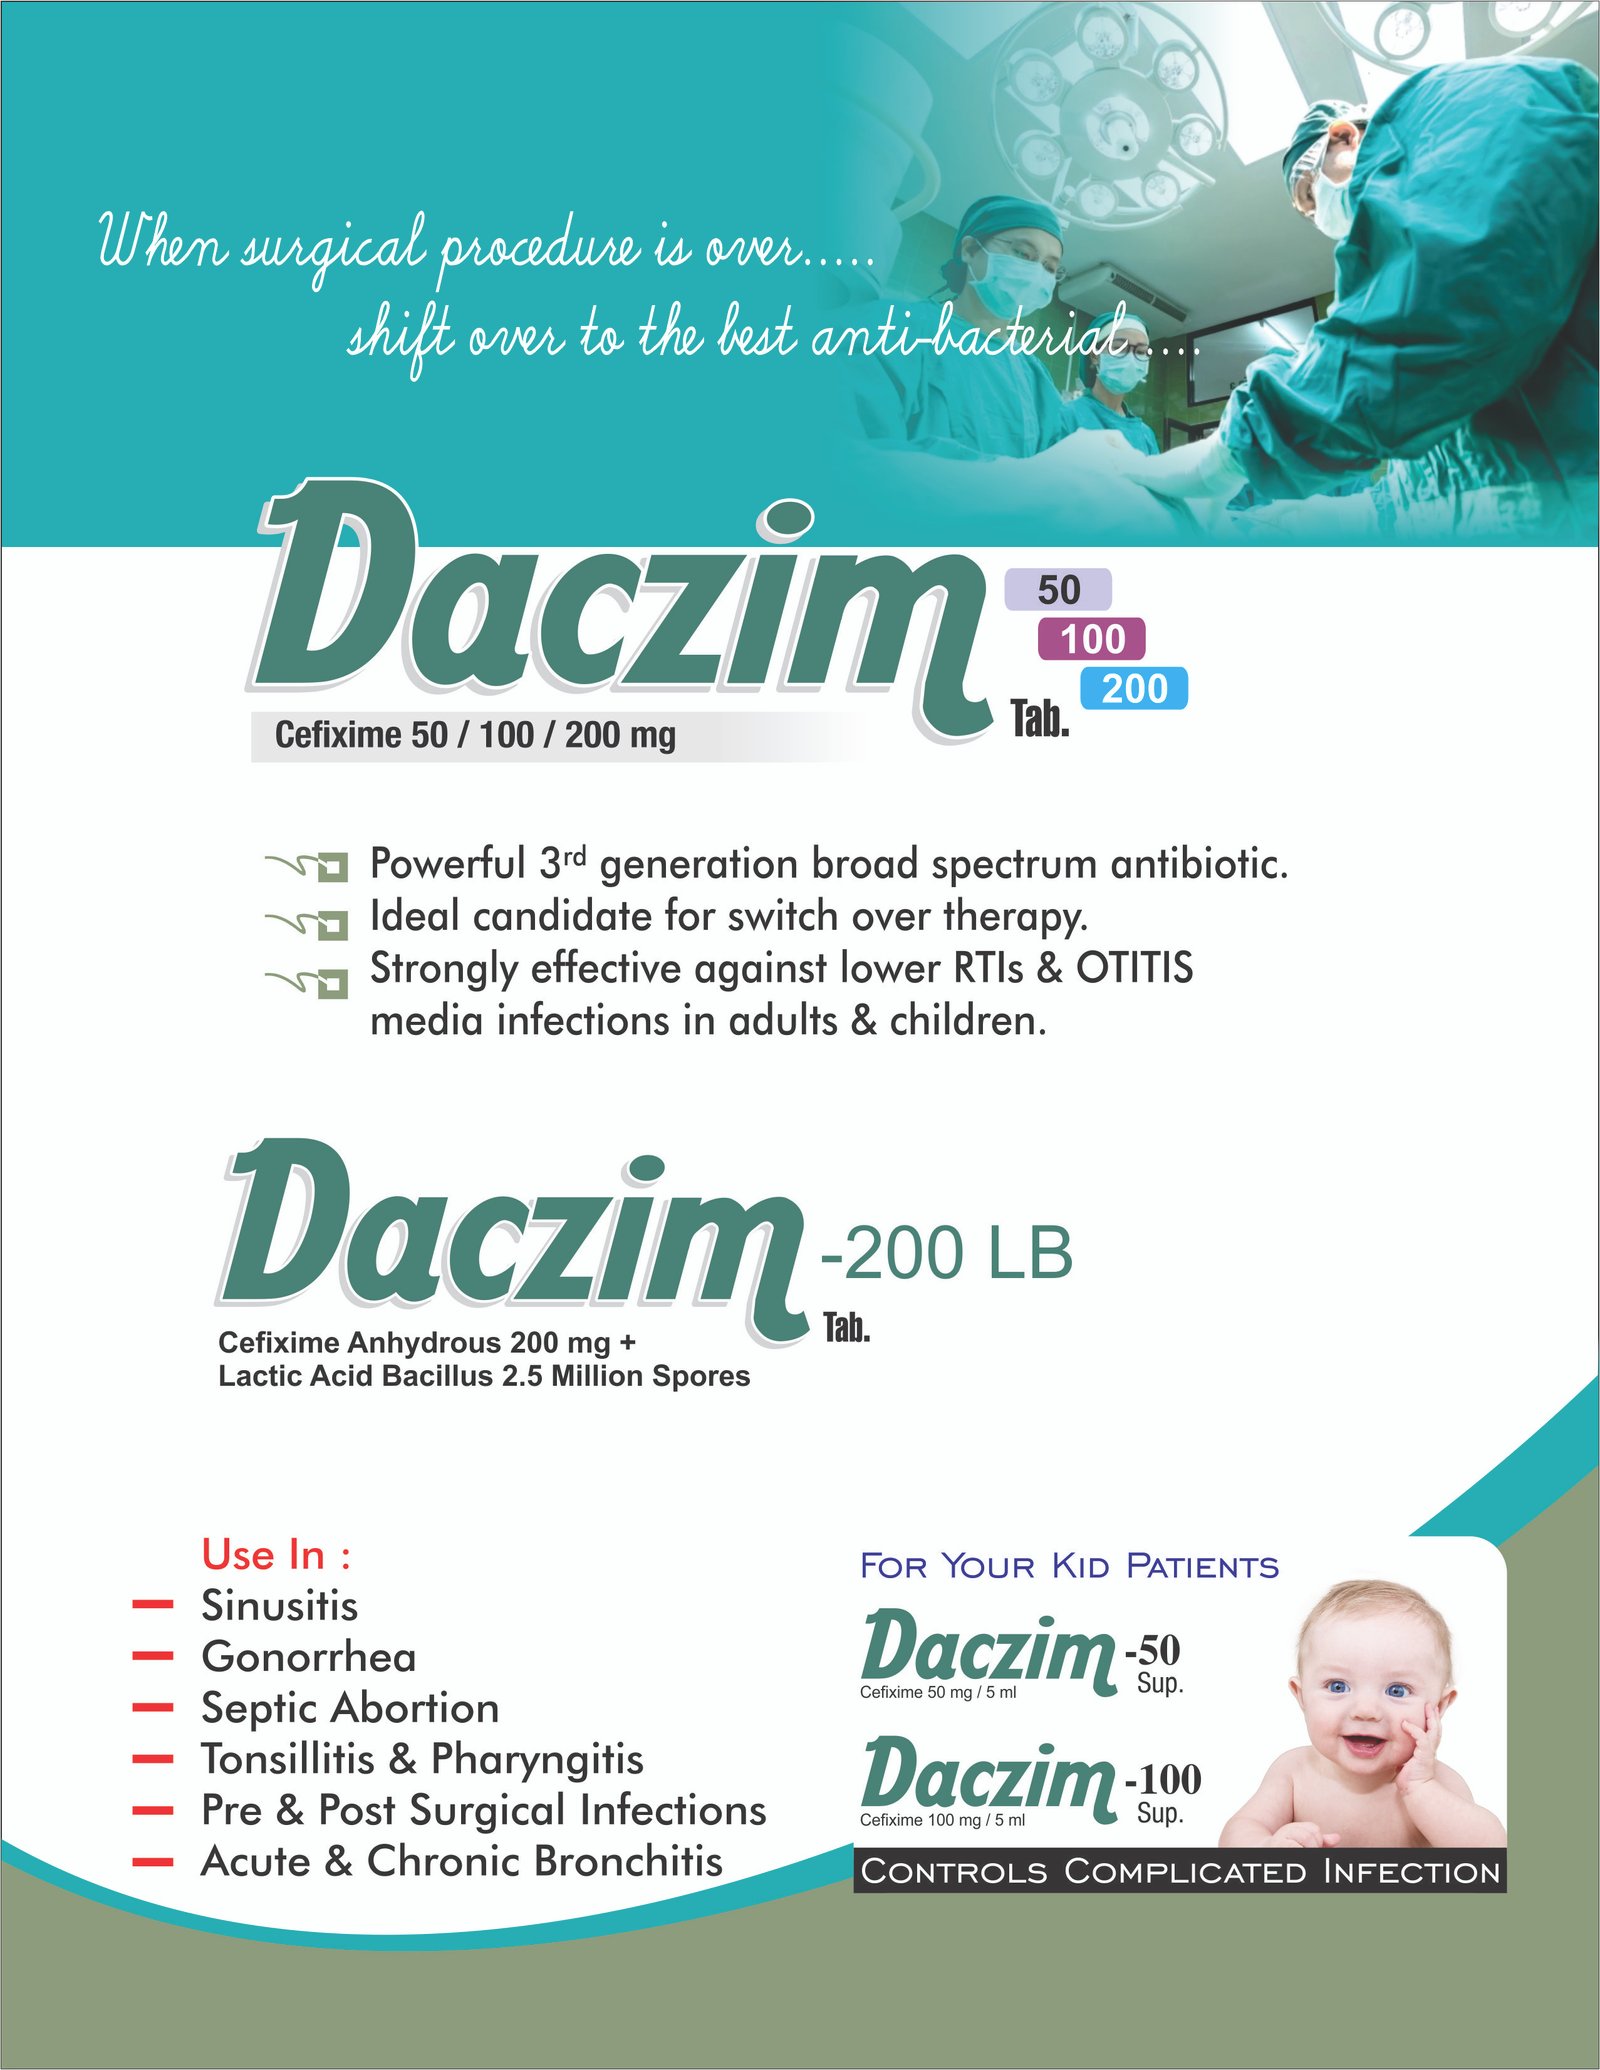 DACZIM, daczim, daksh pharmaceuticals, daksh pharmaceuticals panchkula, anti-bacterial, pcd franchise